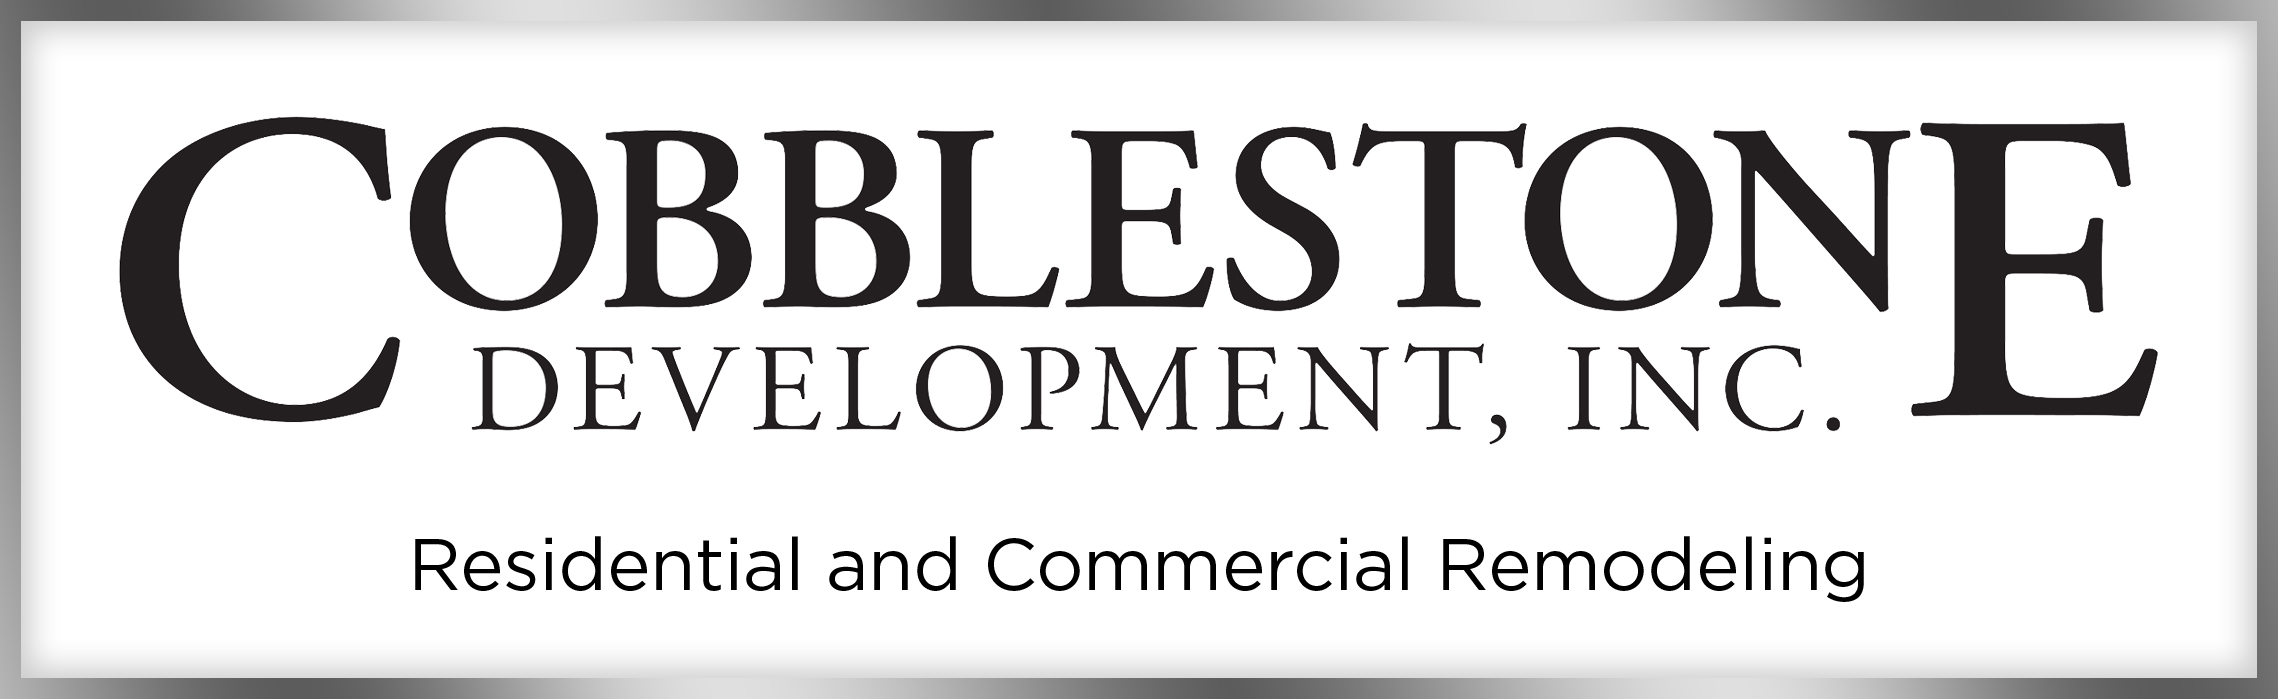 Cobblestone Remodeling, Inc Logo